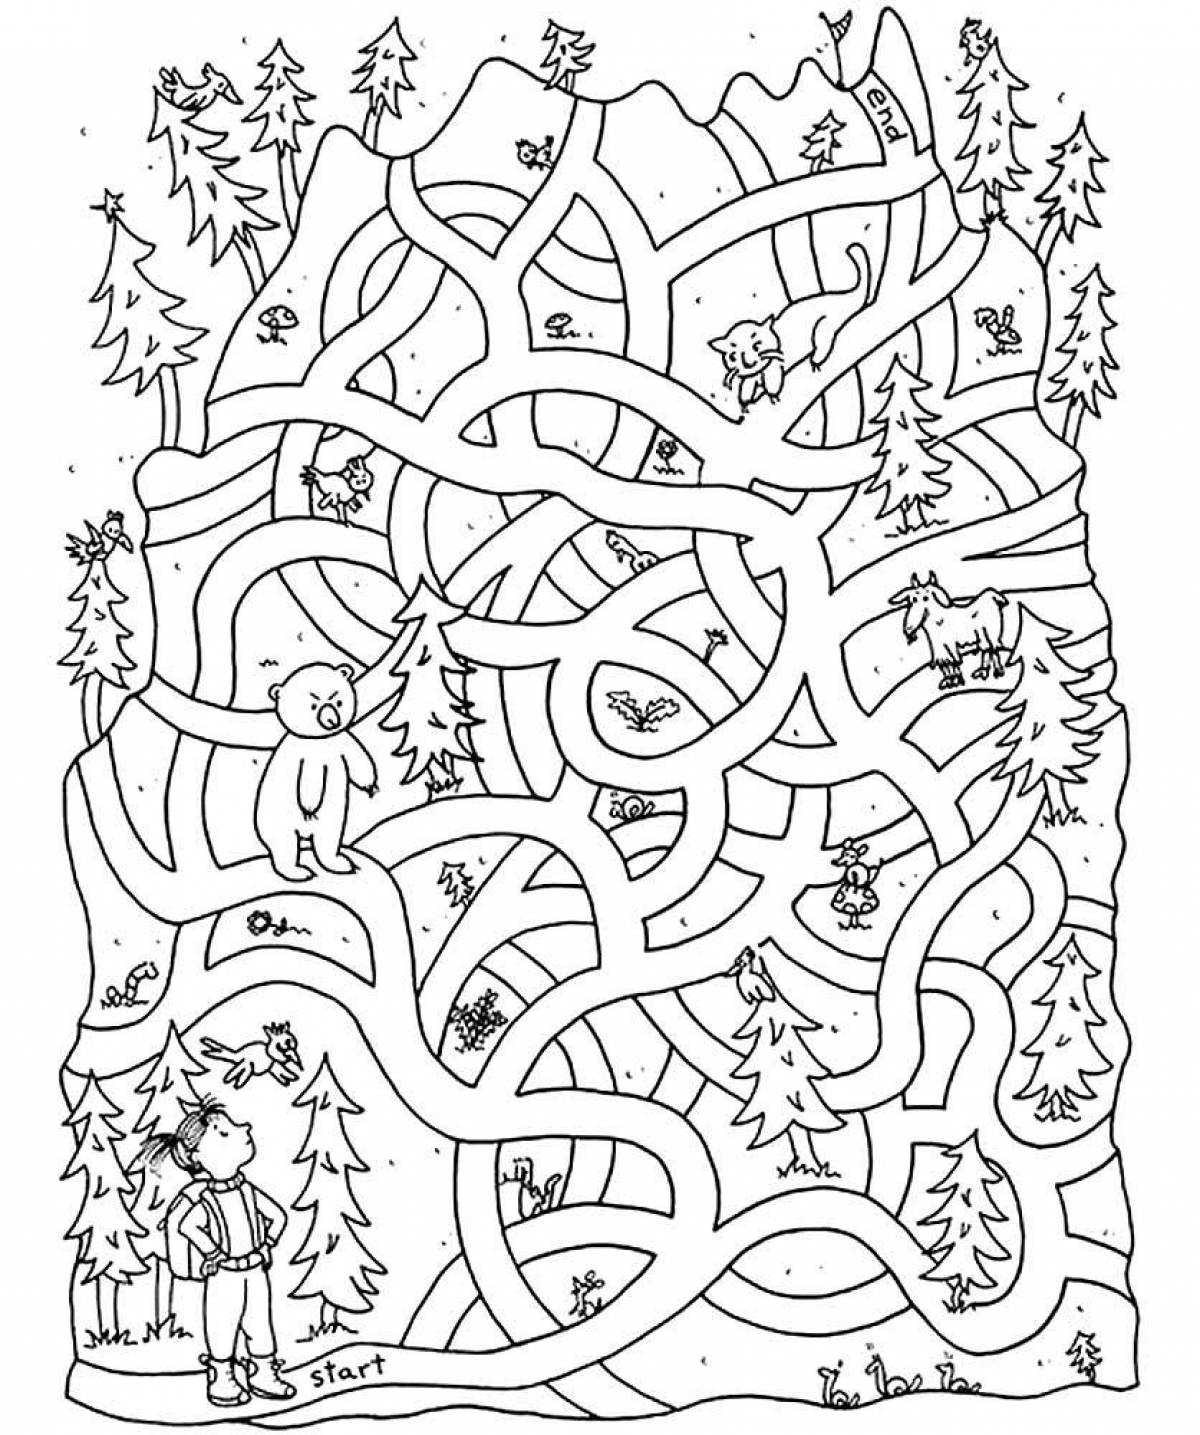 Fancy maze coloring book